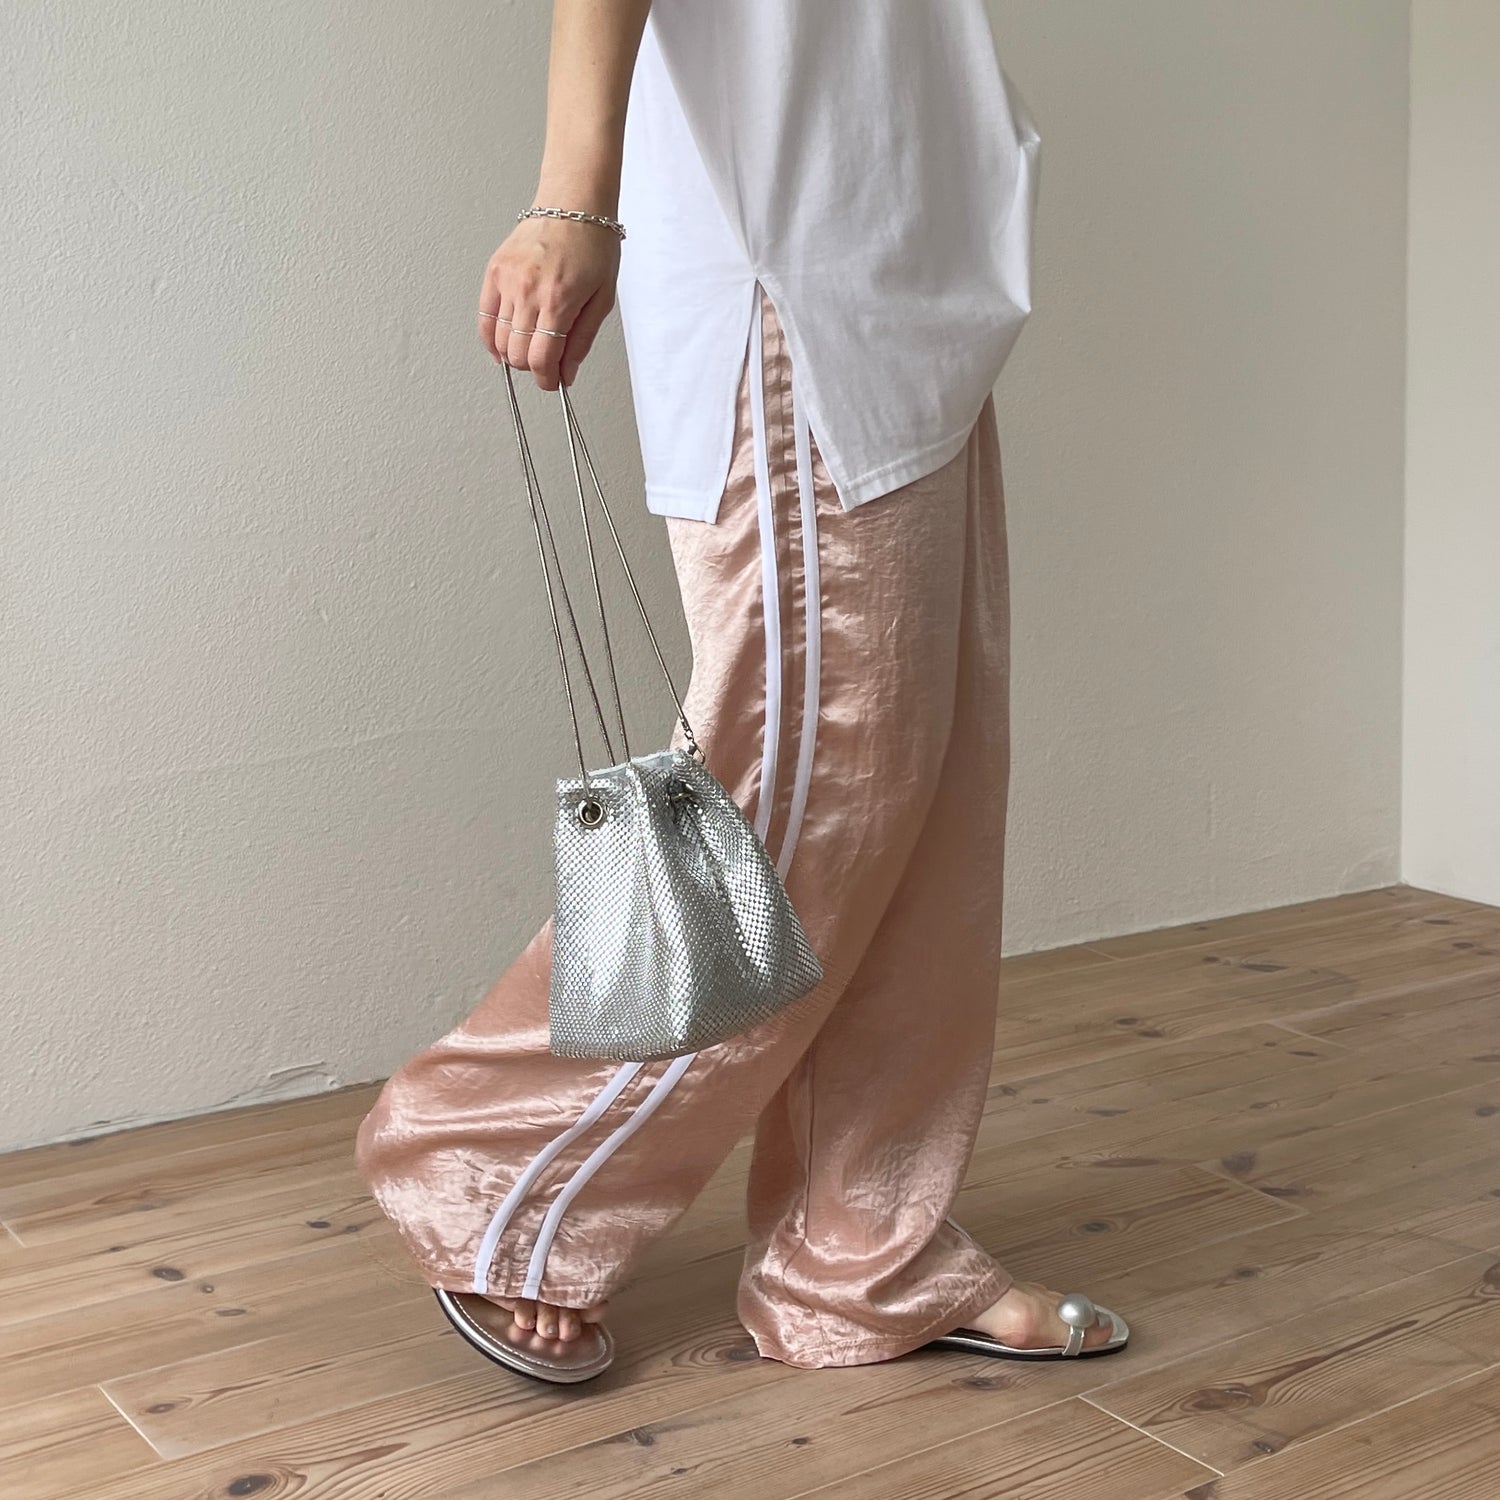 side line shiny pants / pink beige